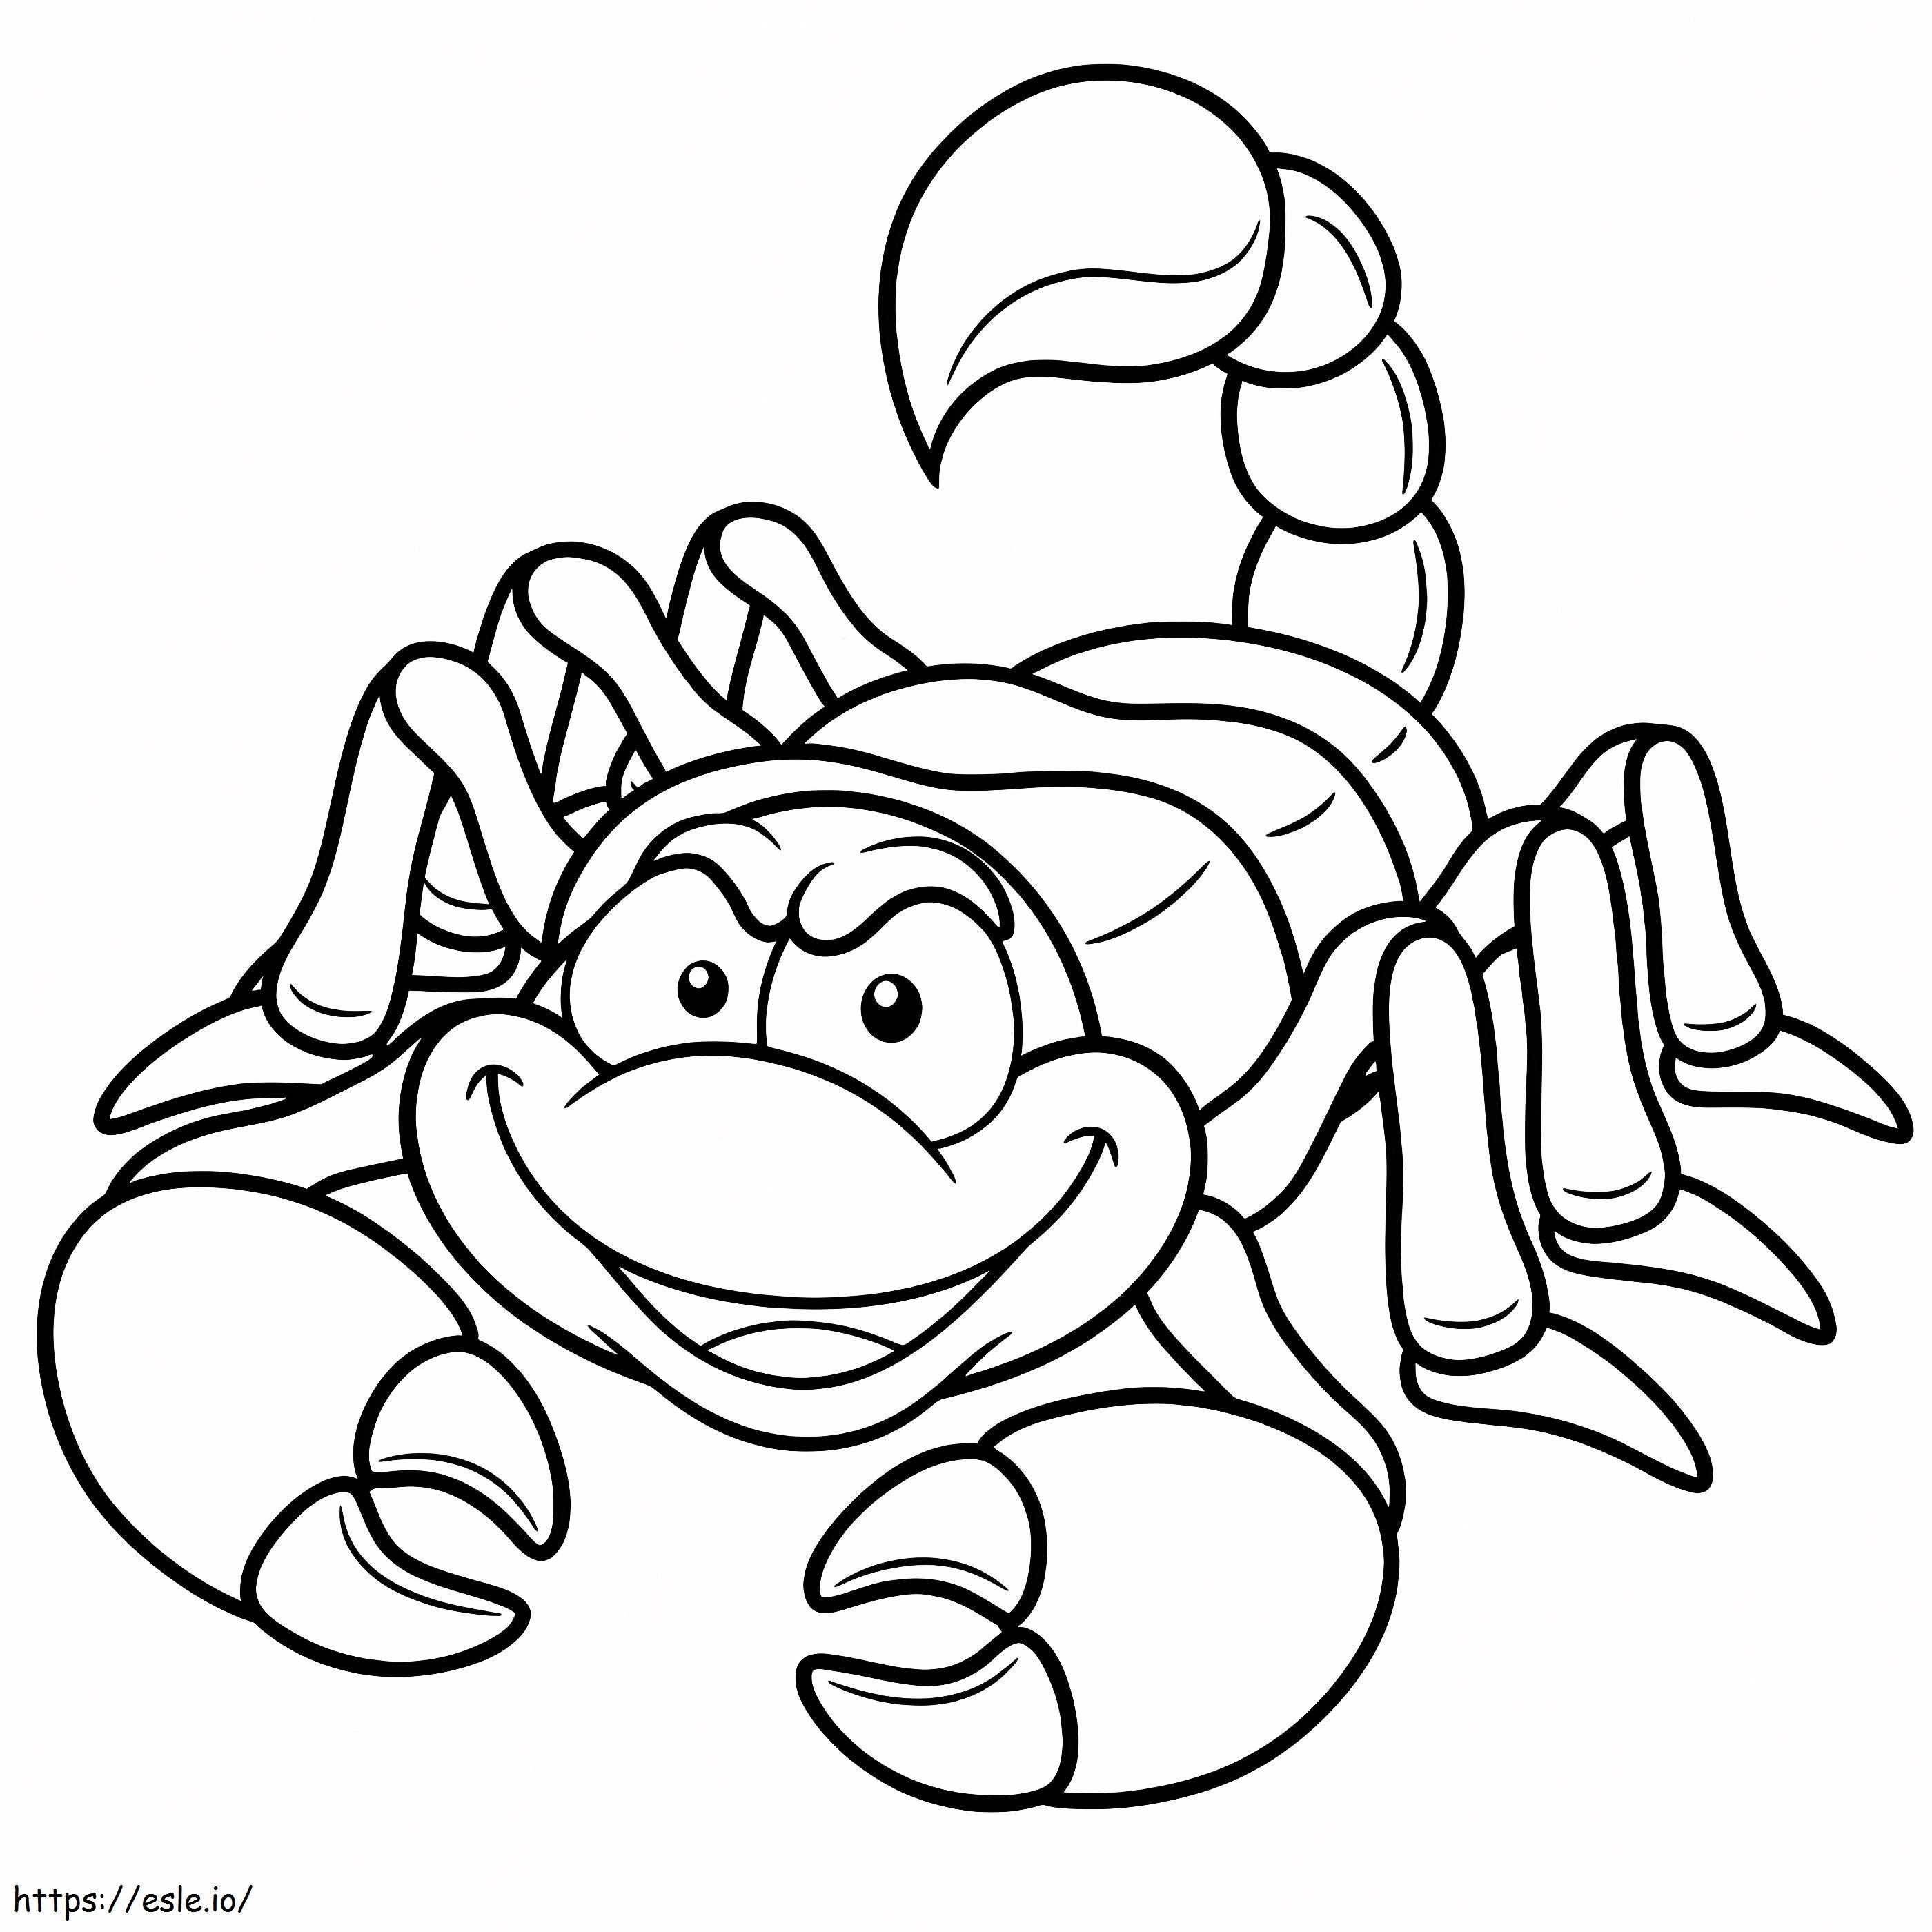 1532140621 Cartoon-Skorpion A4 ausmalbilder